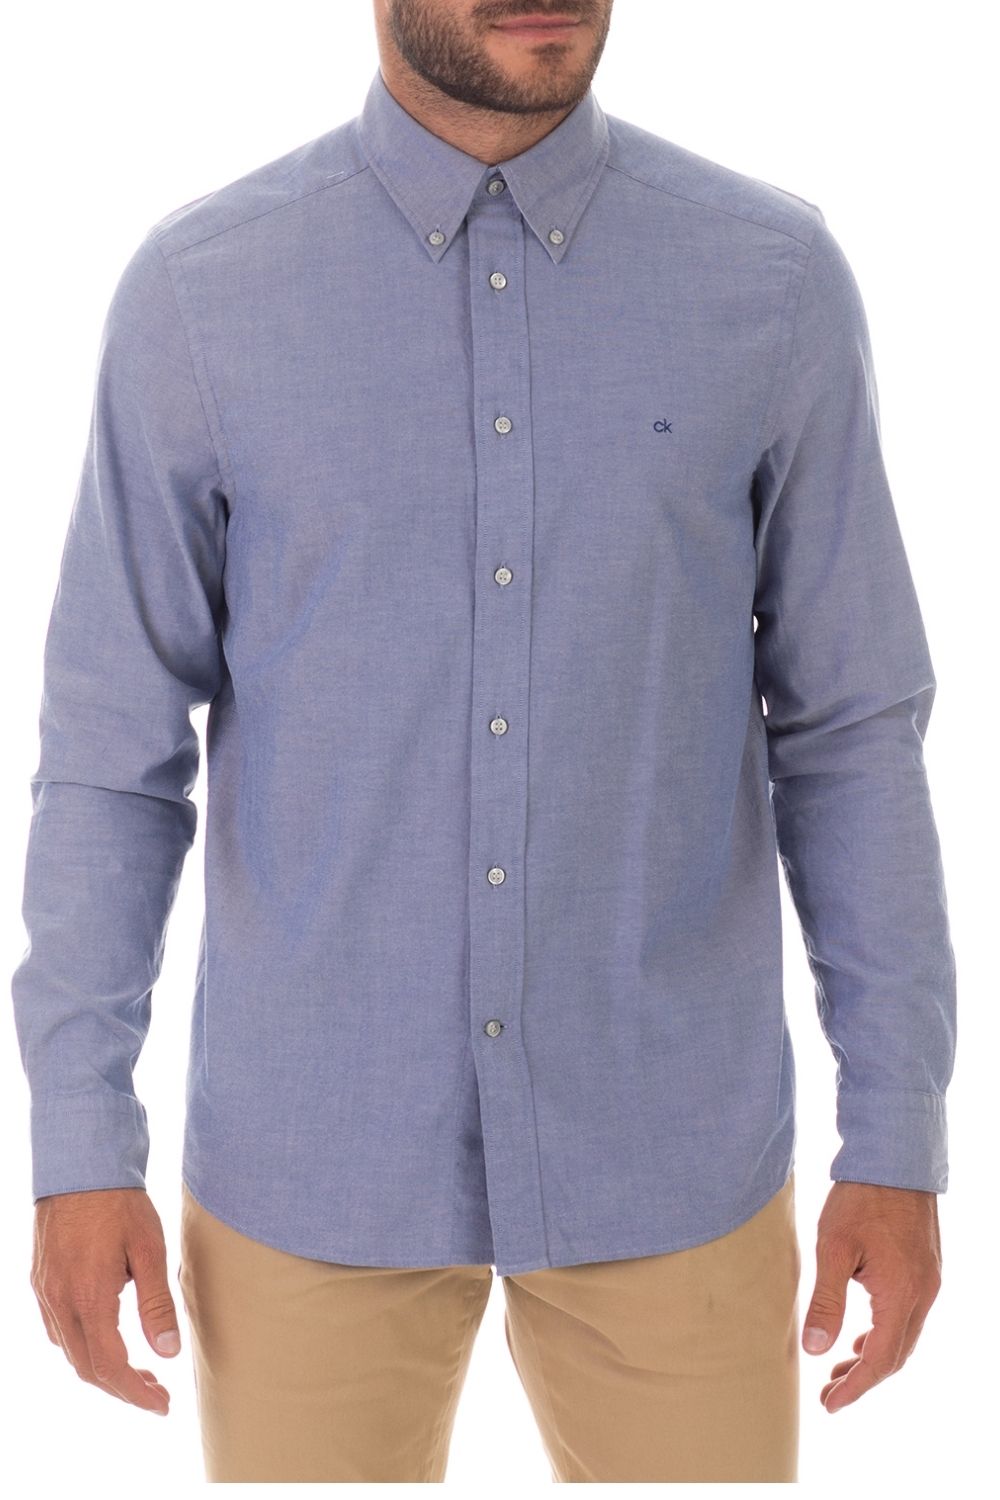 CK - Ανδρικό πουκάμισο CK γαλάζιο Ανδρικά/Ρούχα/Πουκάμισα/Μακρυμάνικα